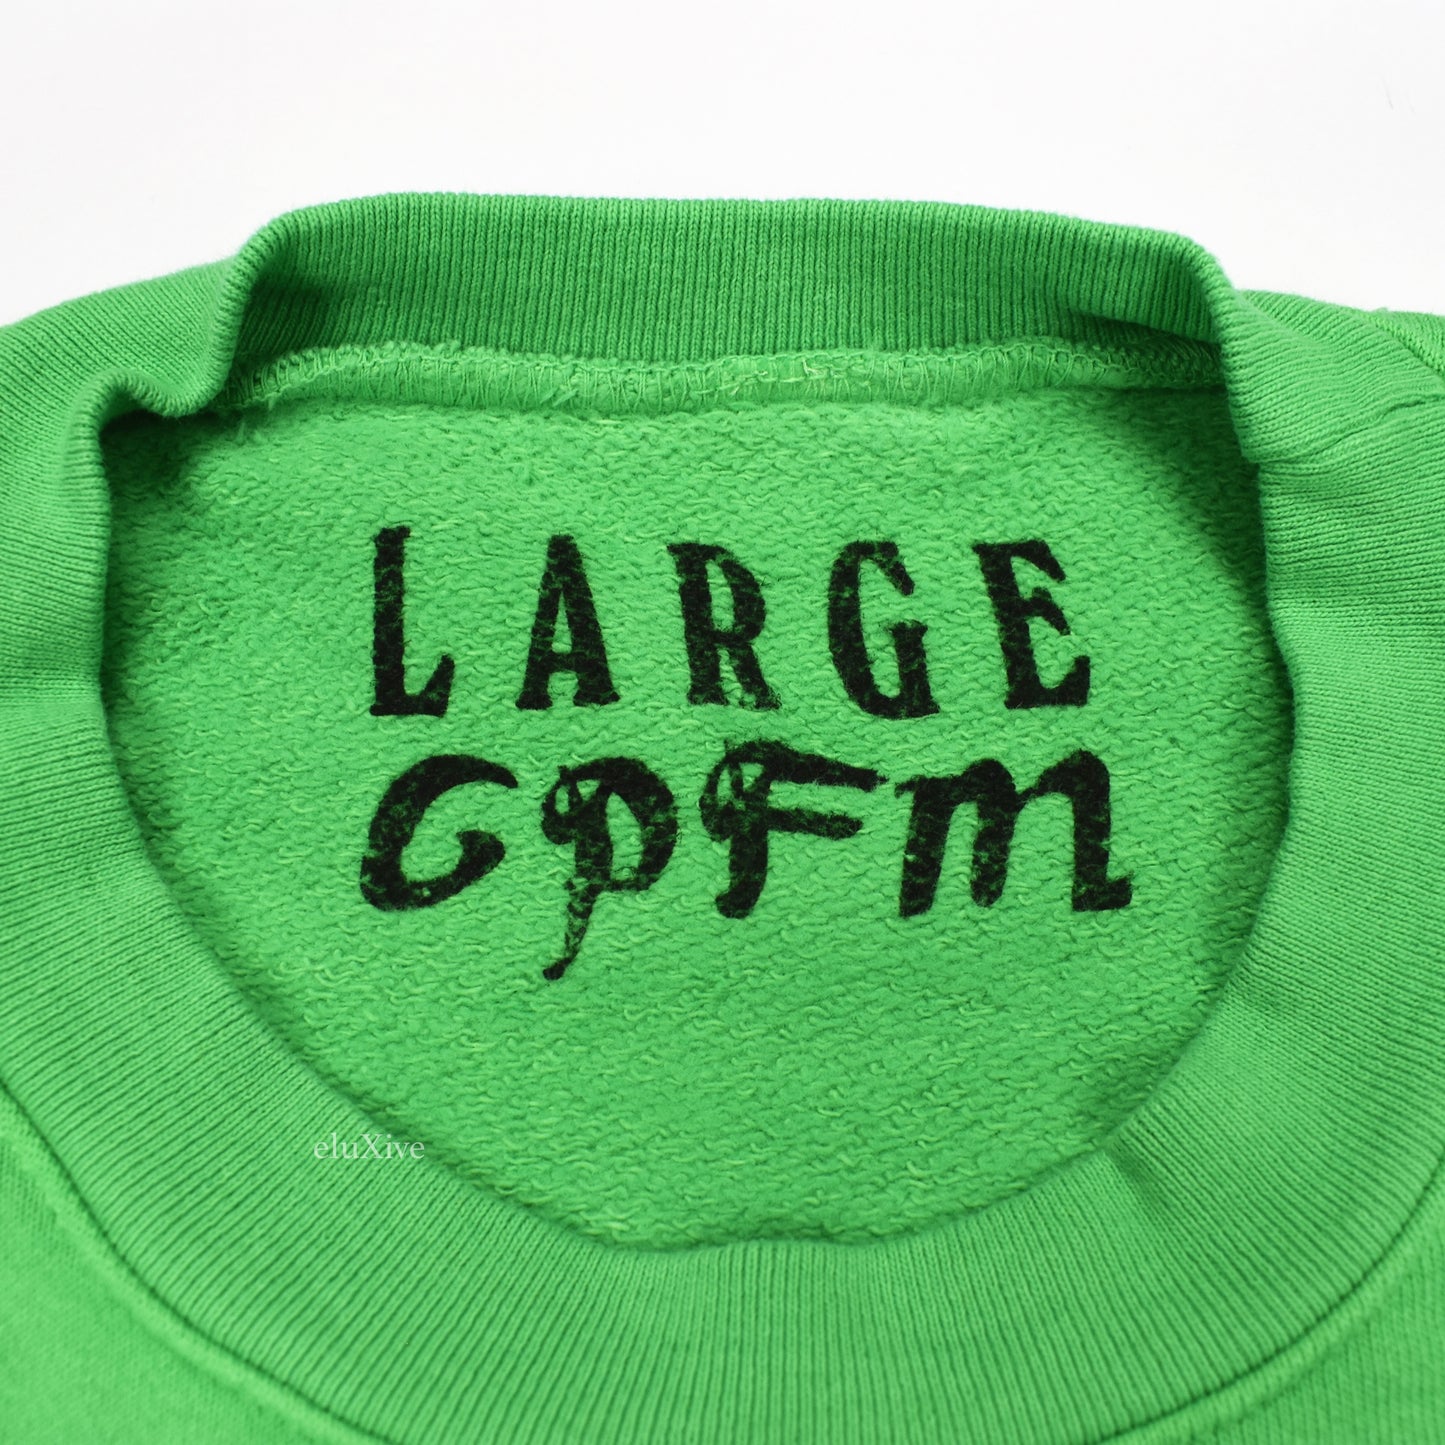 Cactus Plant Flea Market - Rolling Stones Logo Sweatshirt (Green)